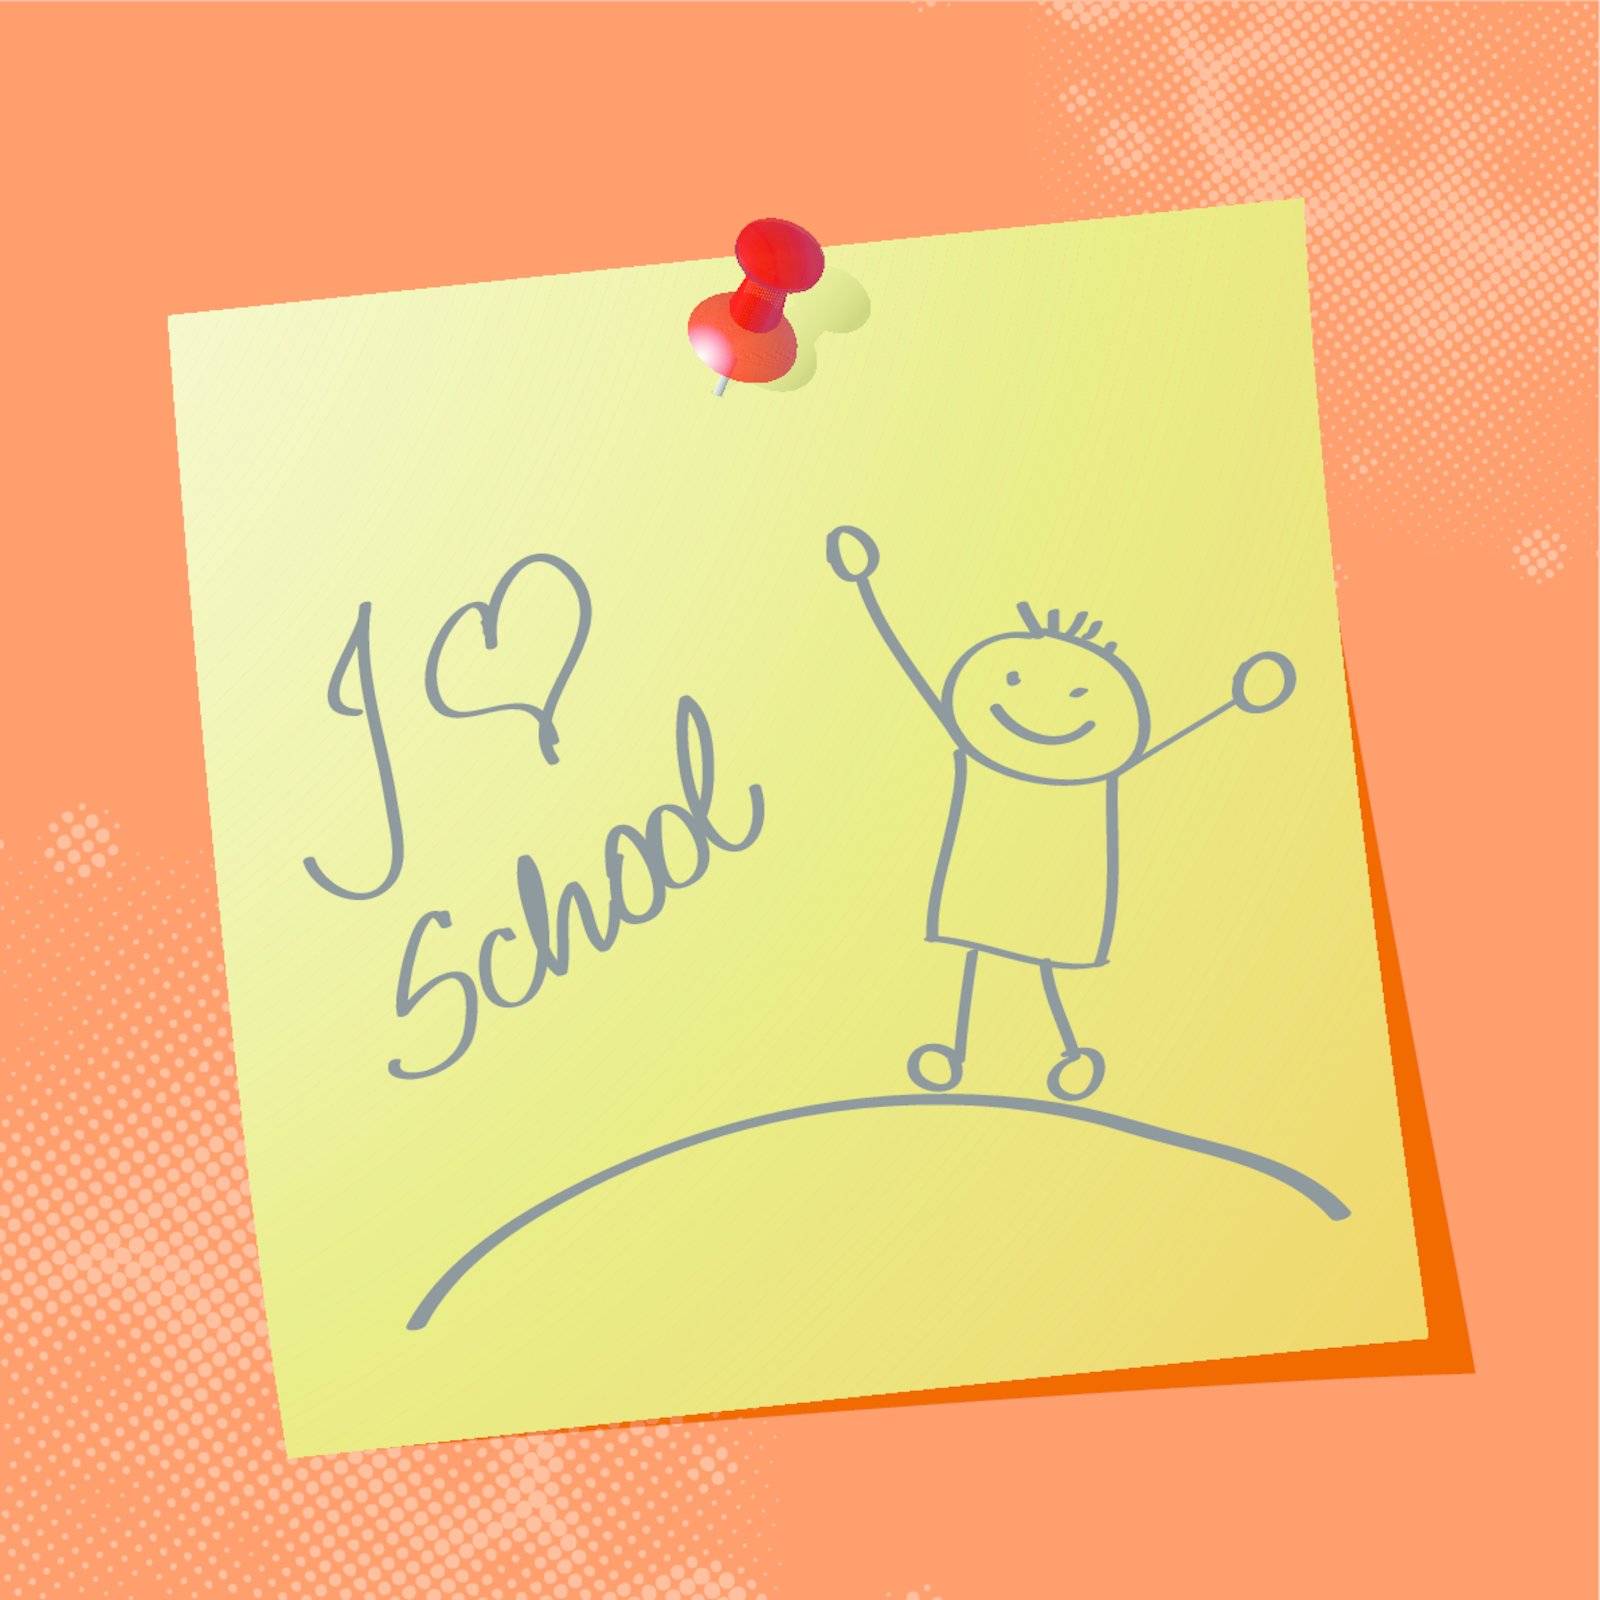 "I love school" handwritten message by milinz